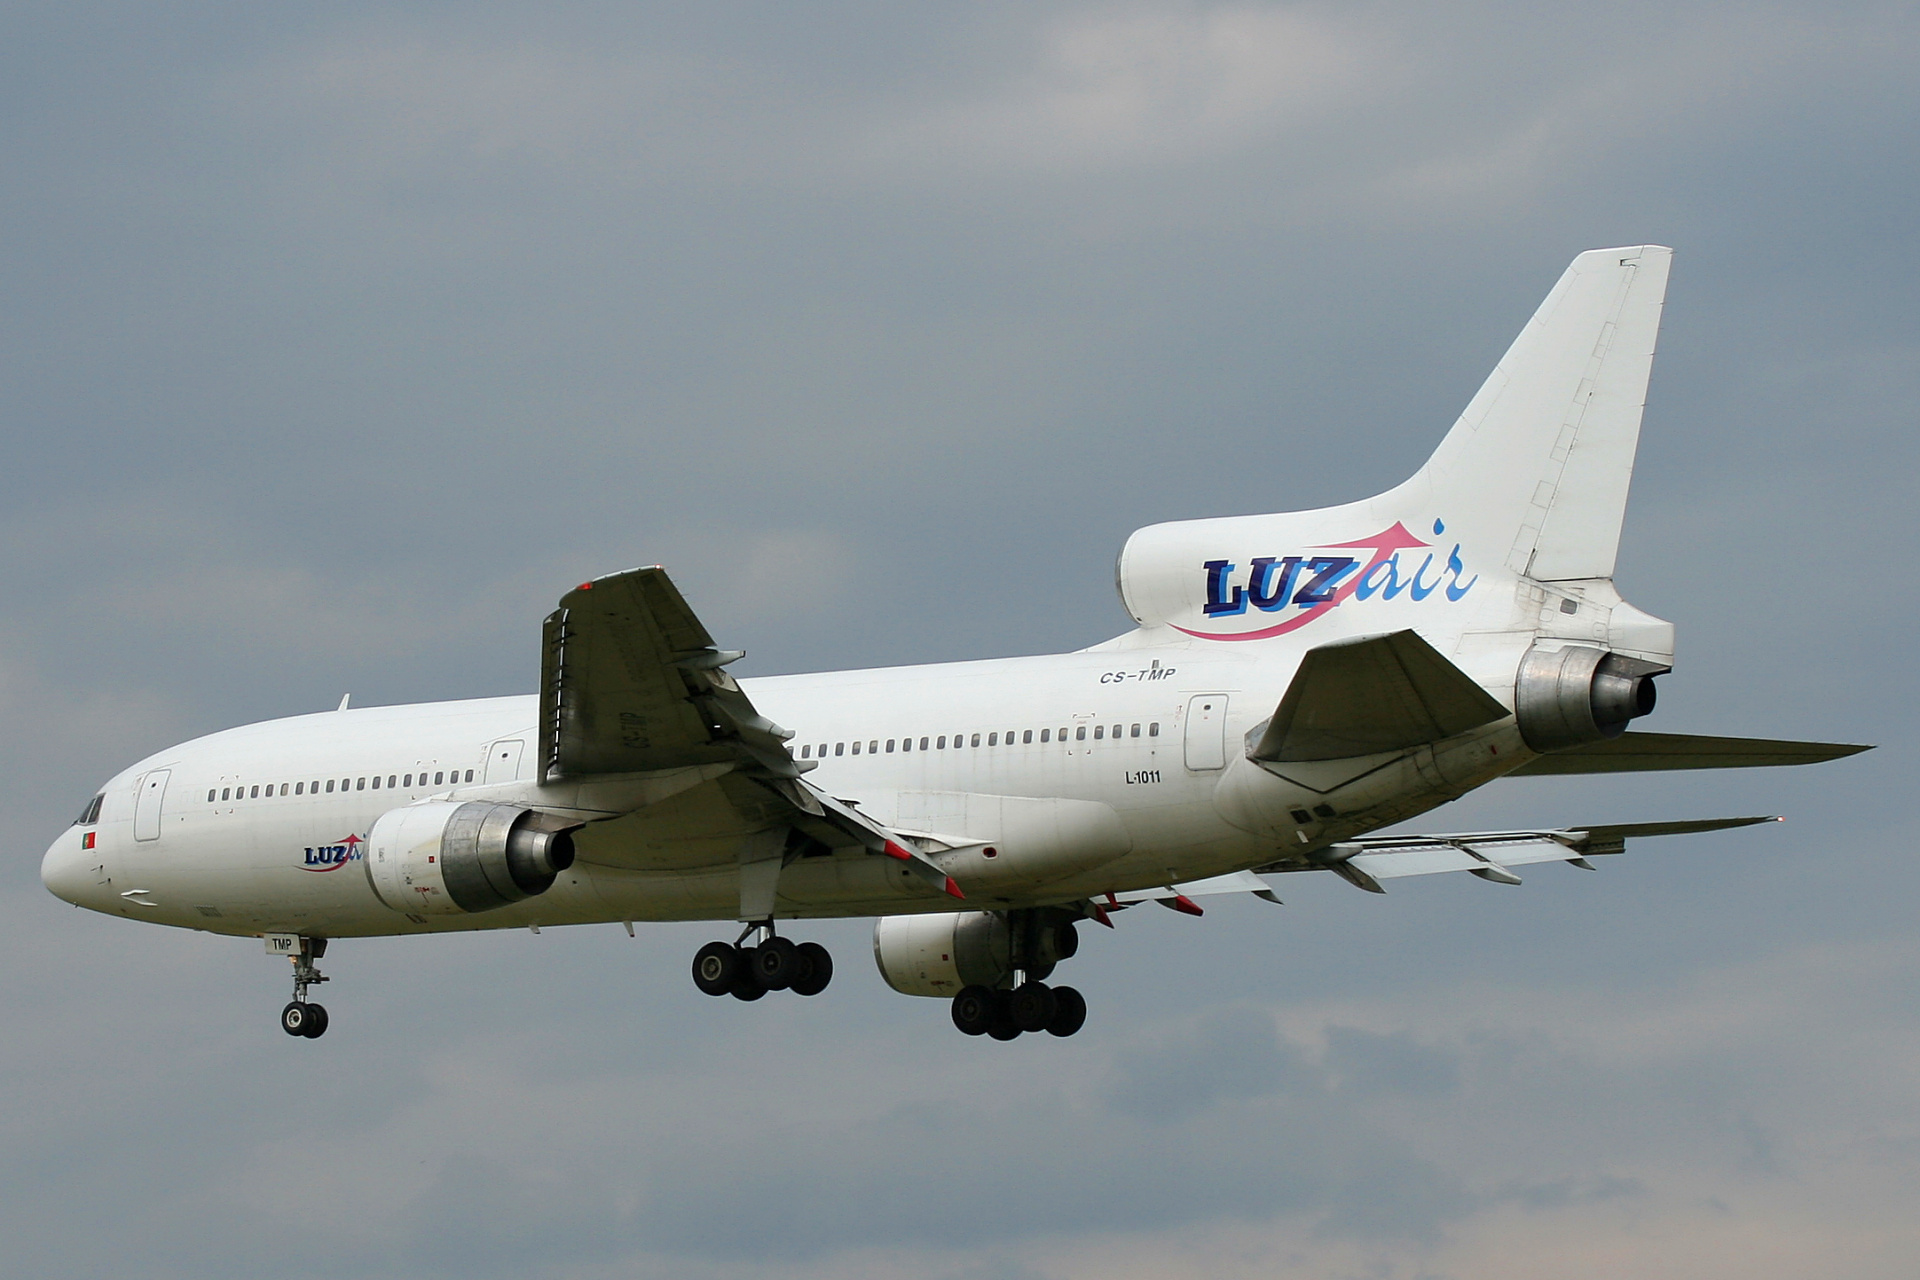 CS-TMP, Luz Air (Aircraft » EPWA Spotting » Lockheed L-1011 TriStar)